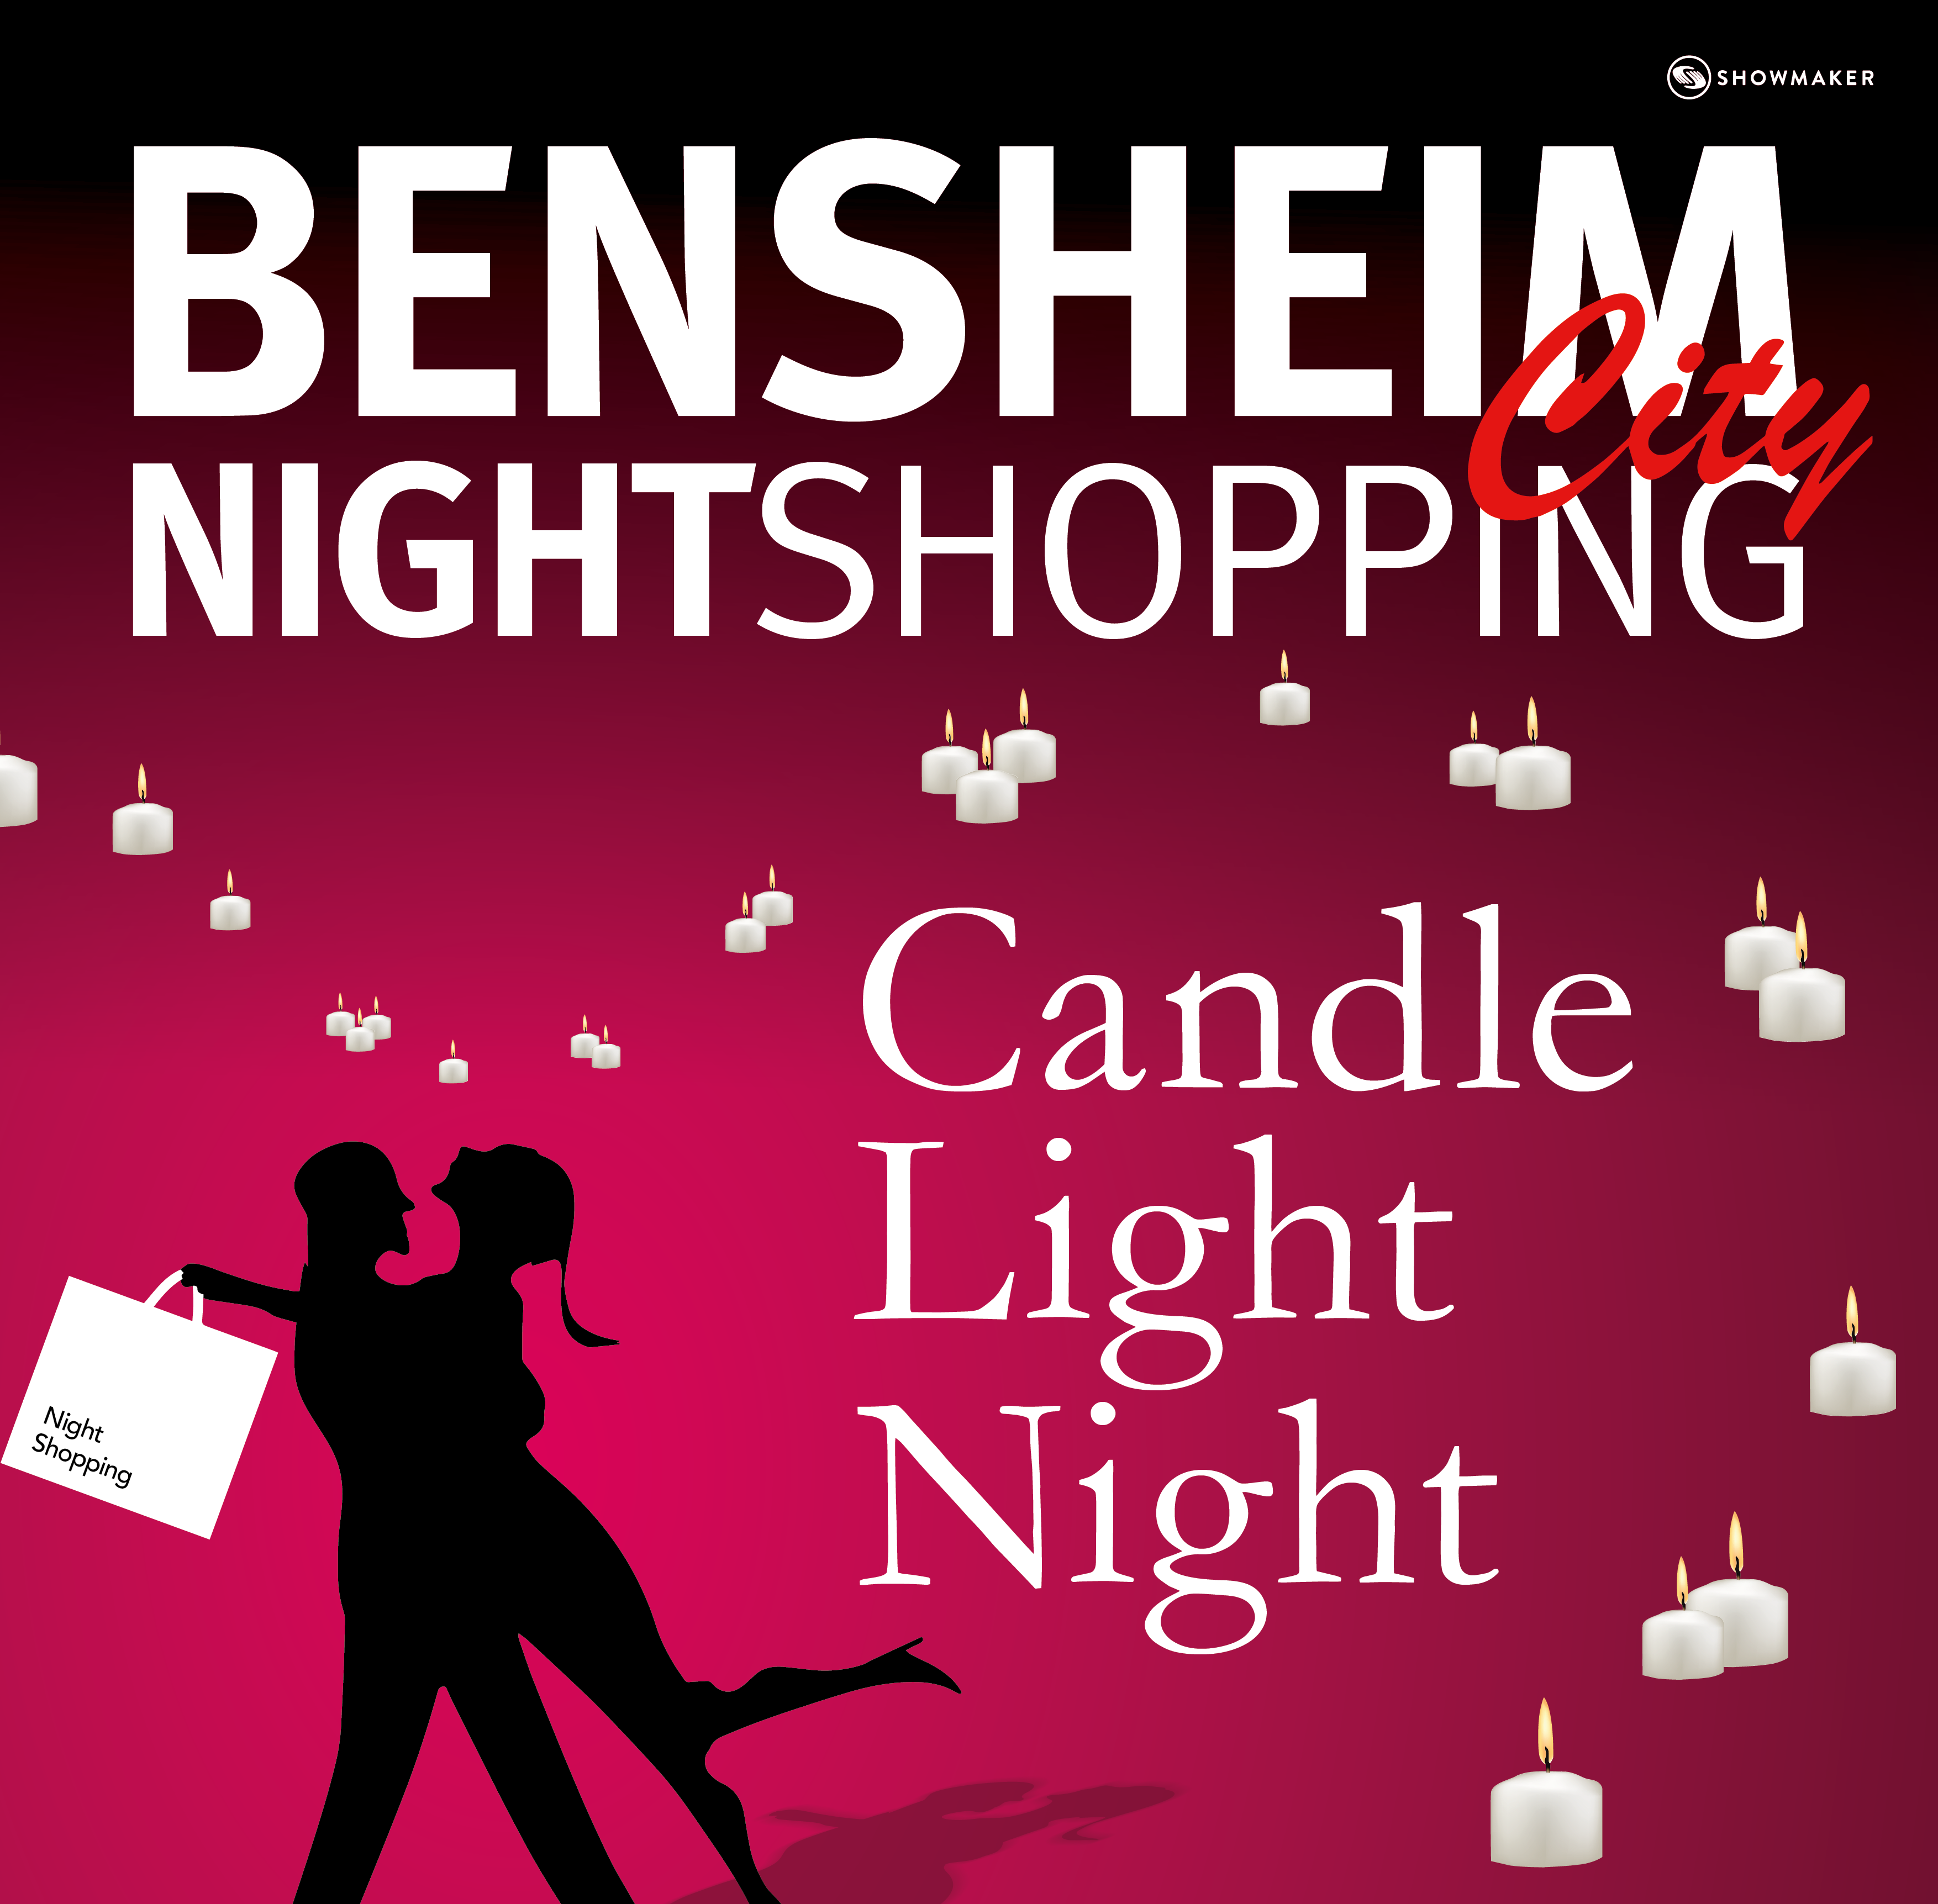 Nightshopping "Candle light Night"